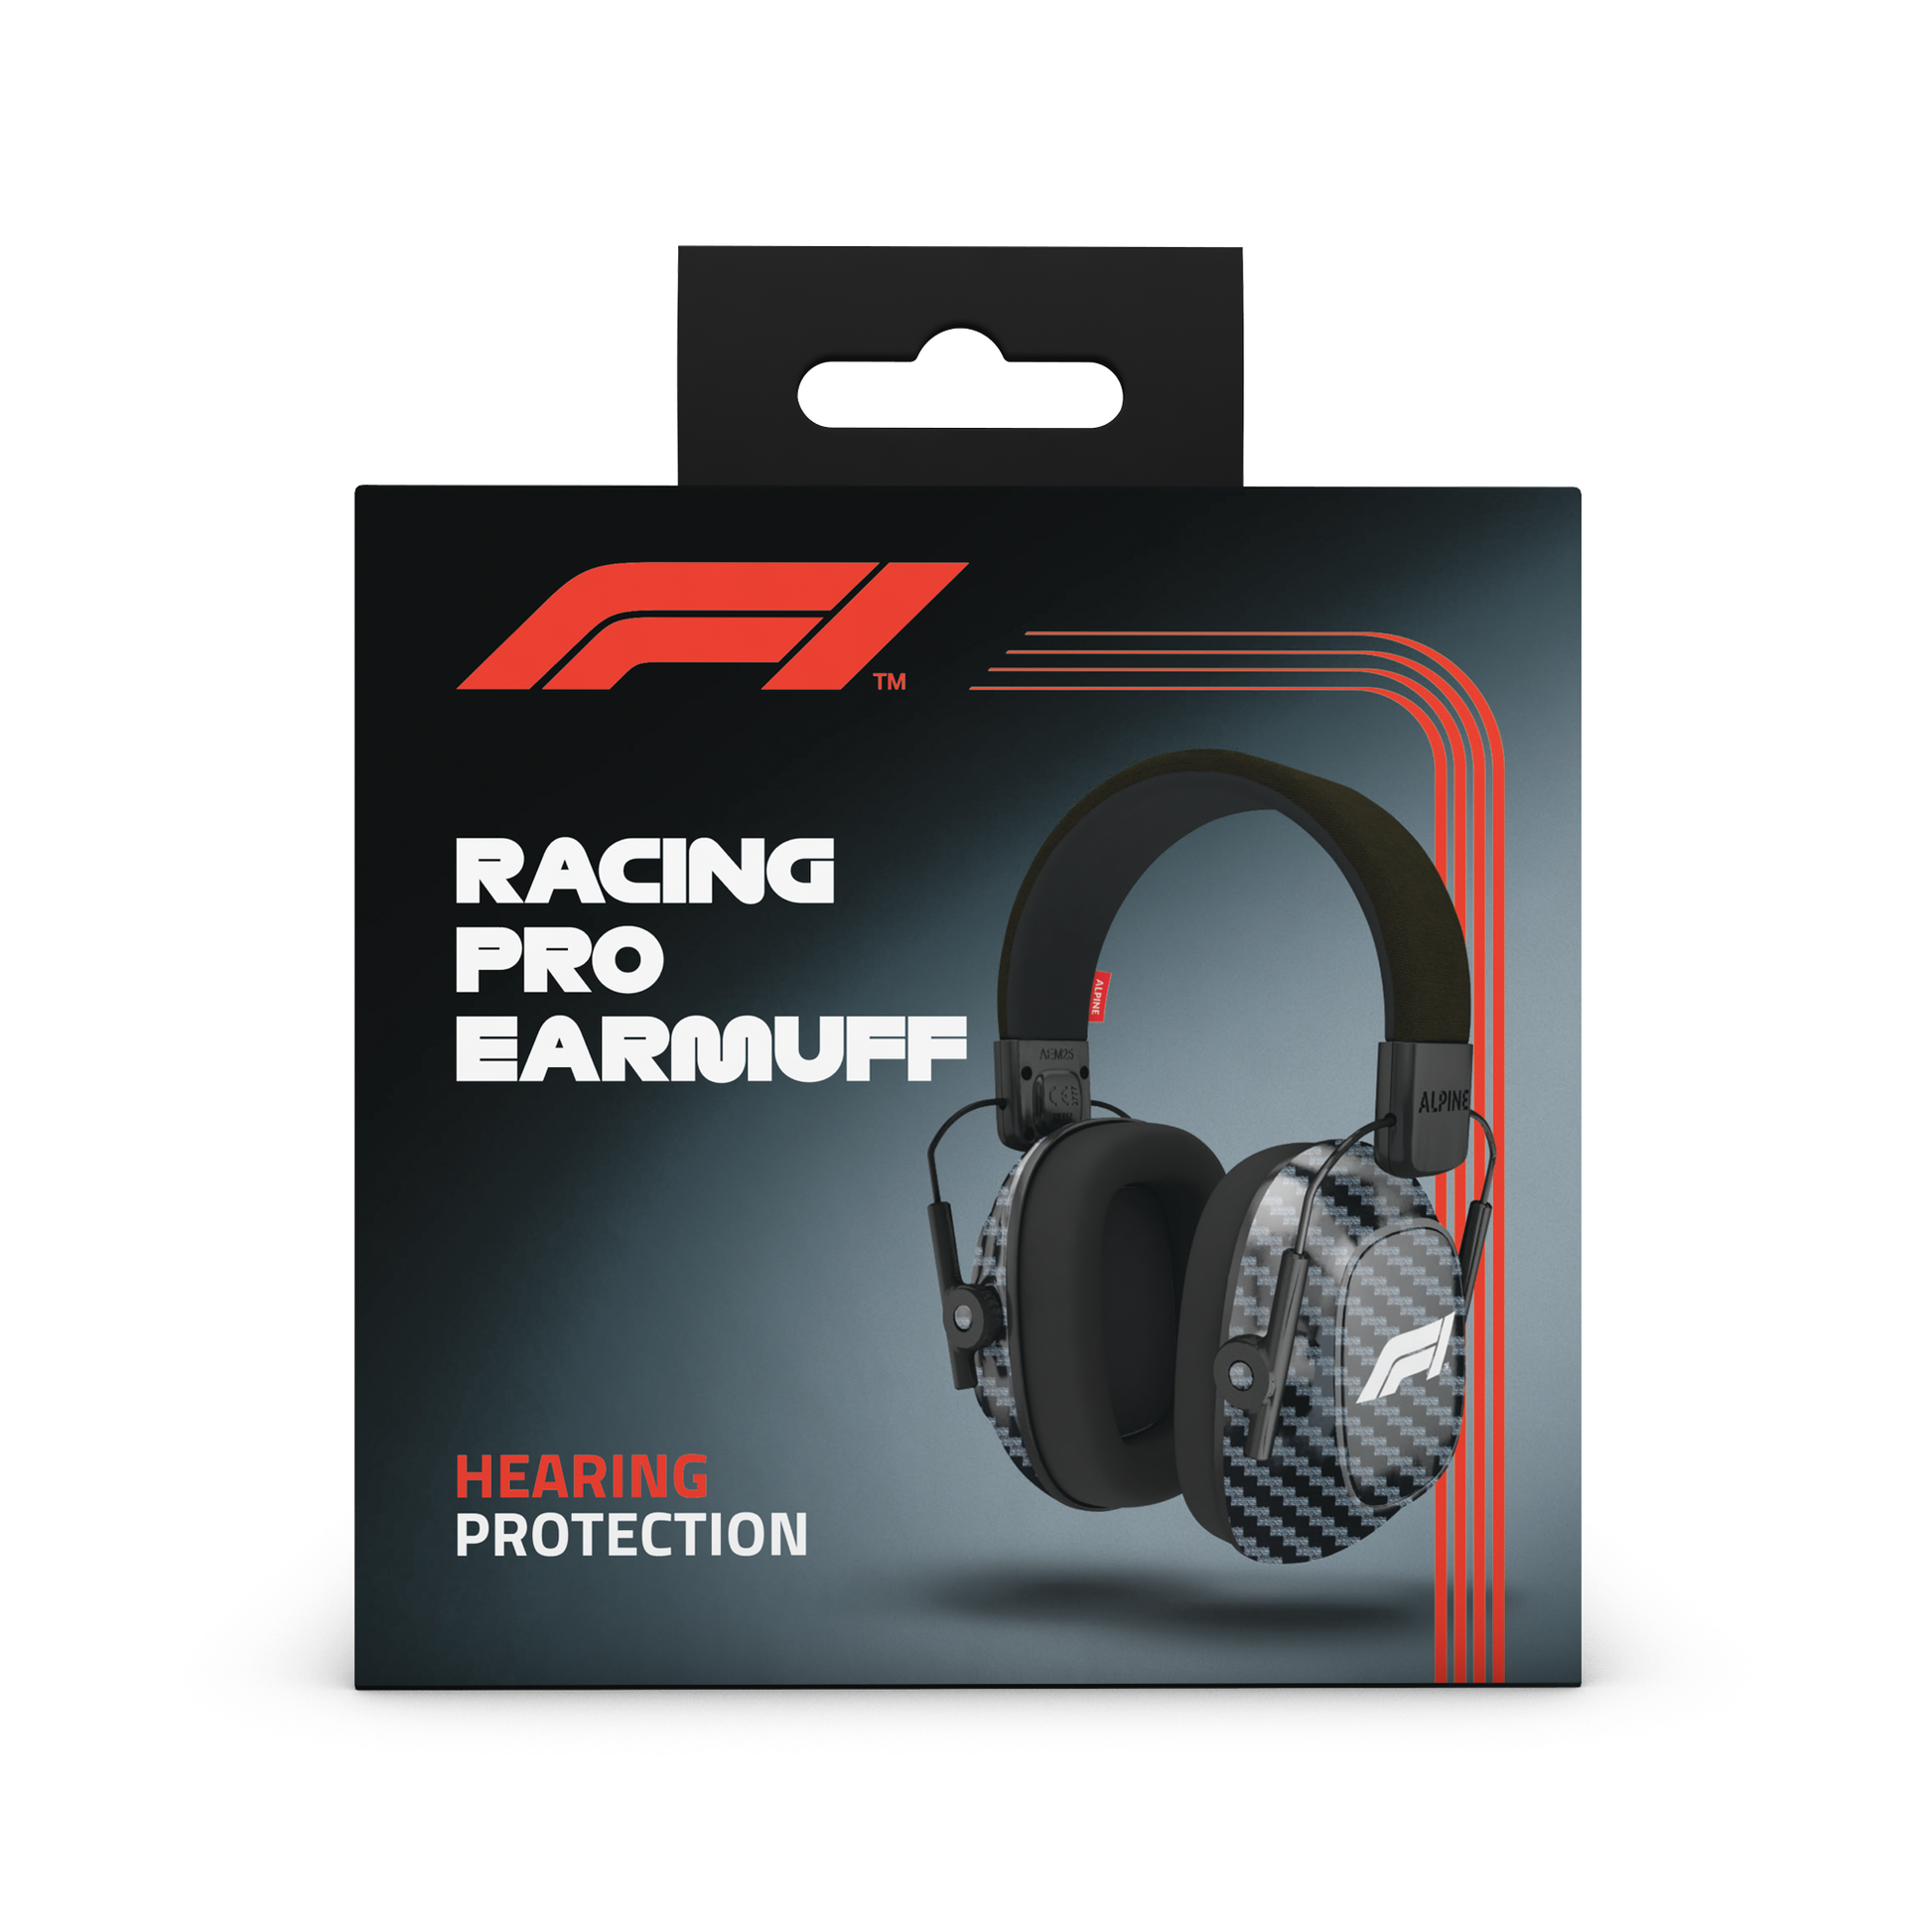 Casque Anti-bruit Formula 1® Racing Pro Earmuff – Alpine Protection Auditive